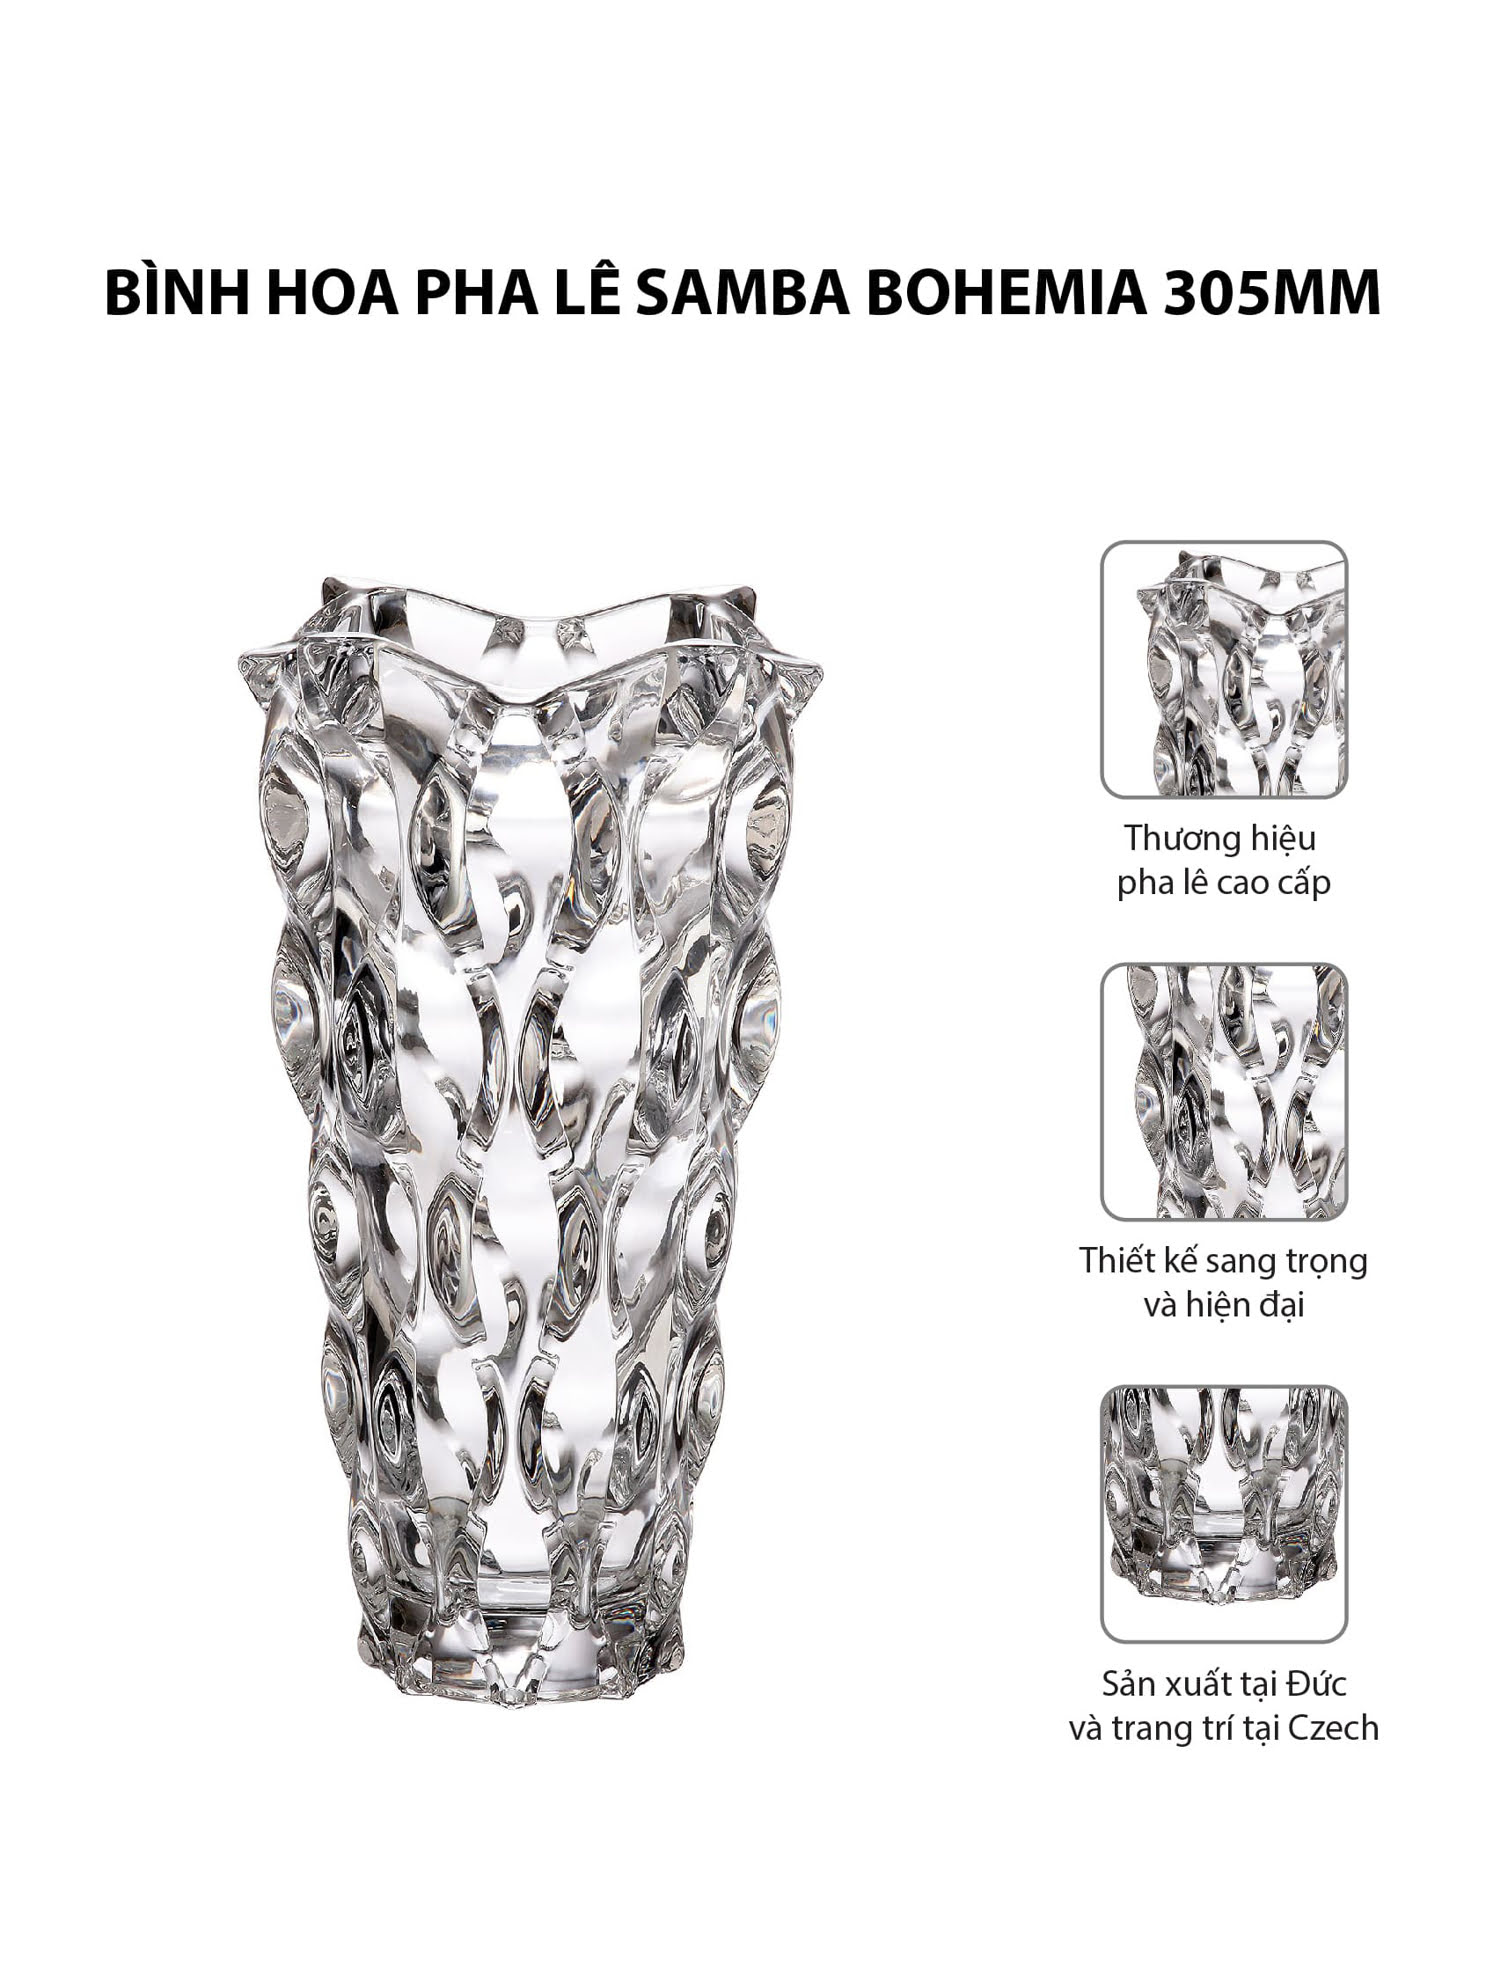 Bình hoa pha lê Samba Bohemia 305mm